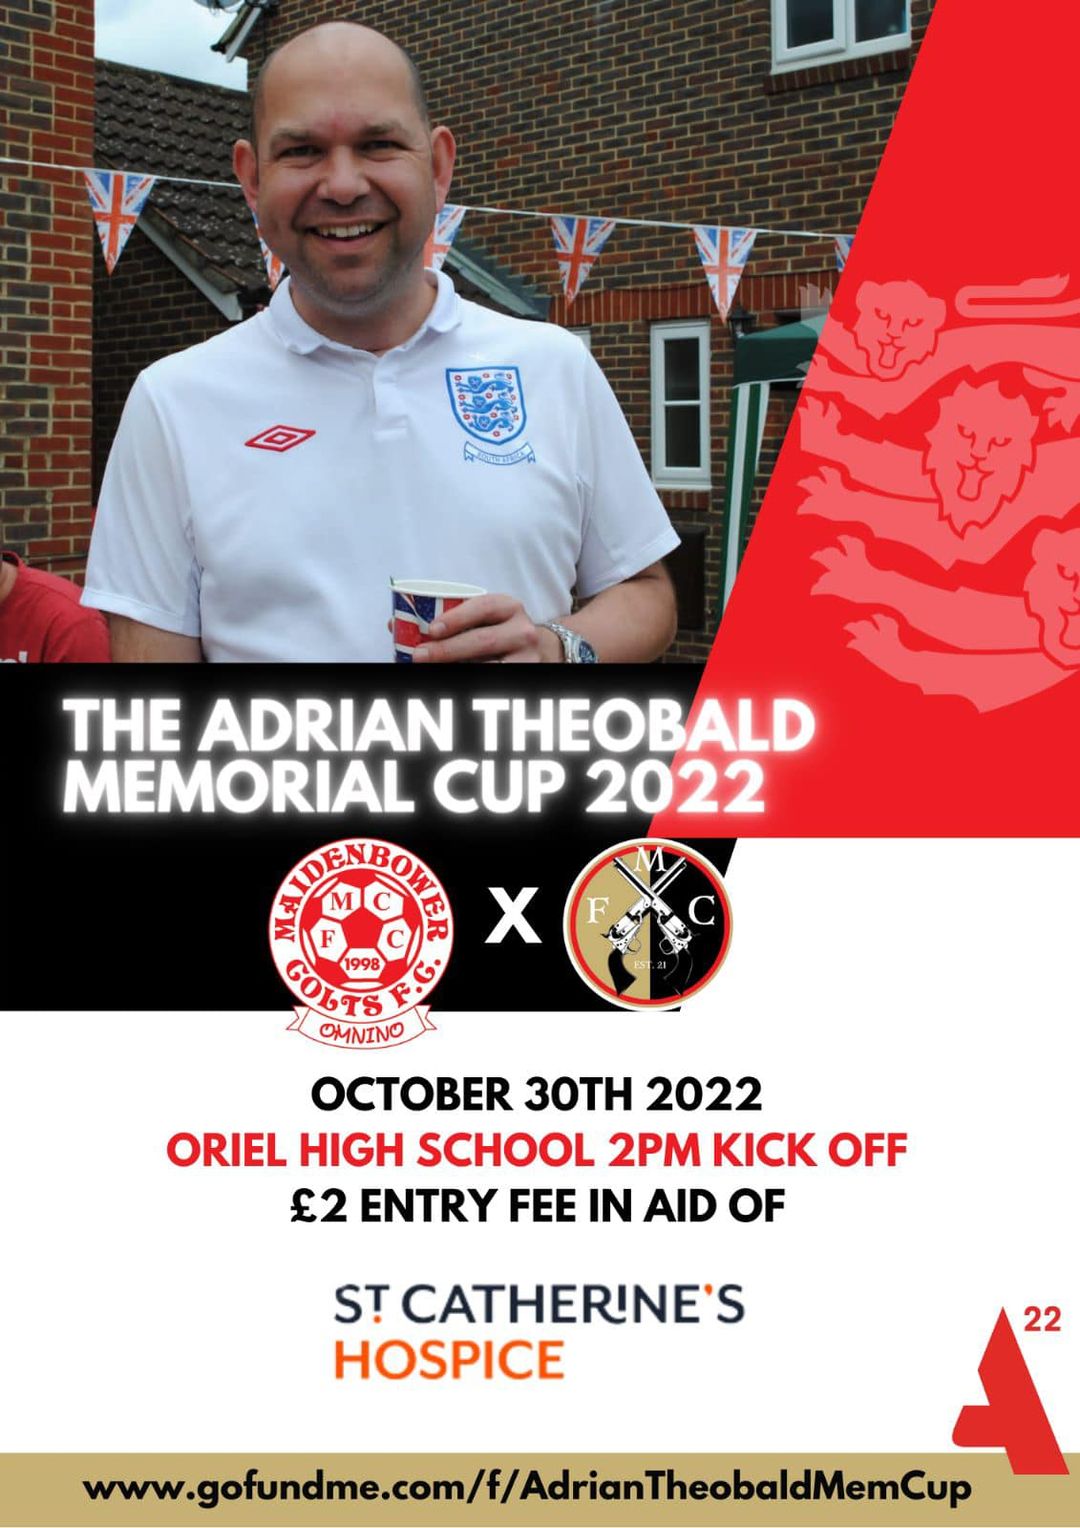 Adrian Theobald Memorial Cup 2022